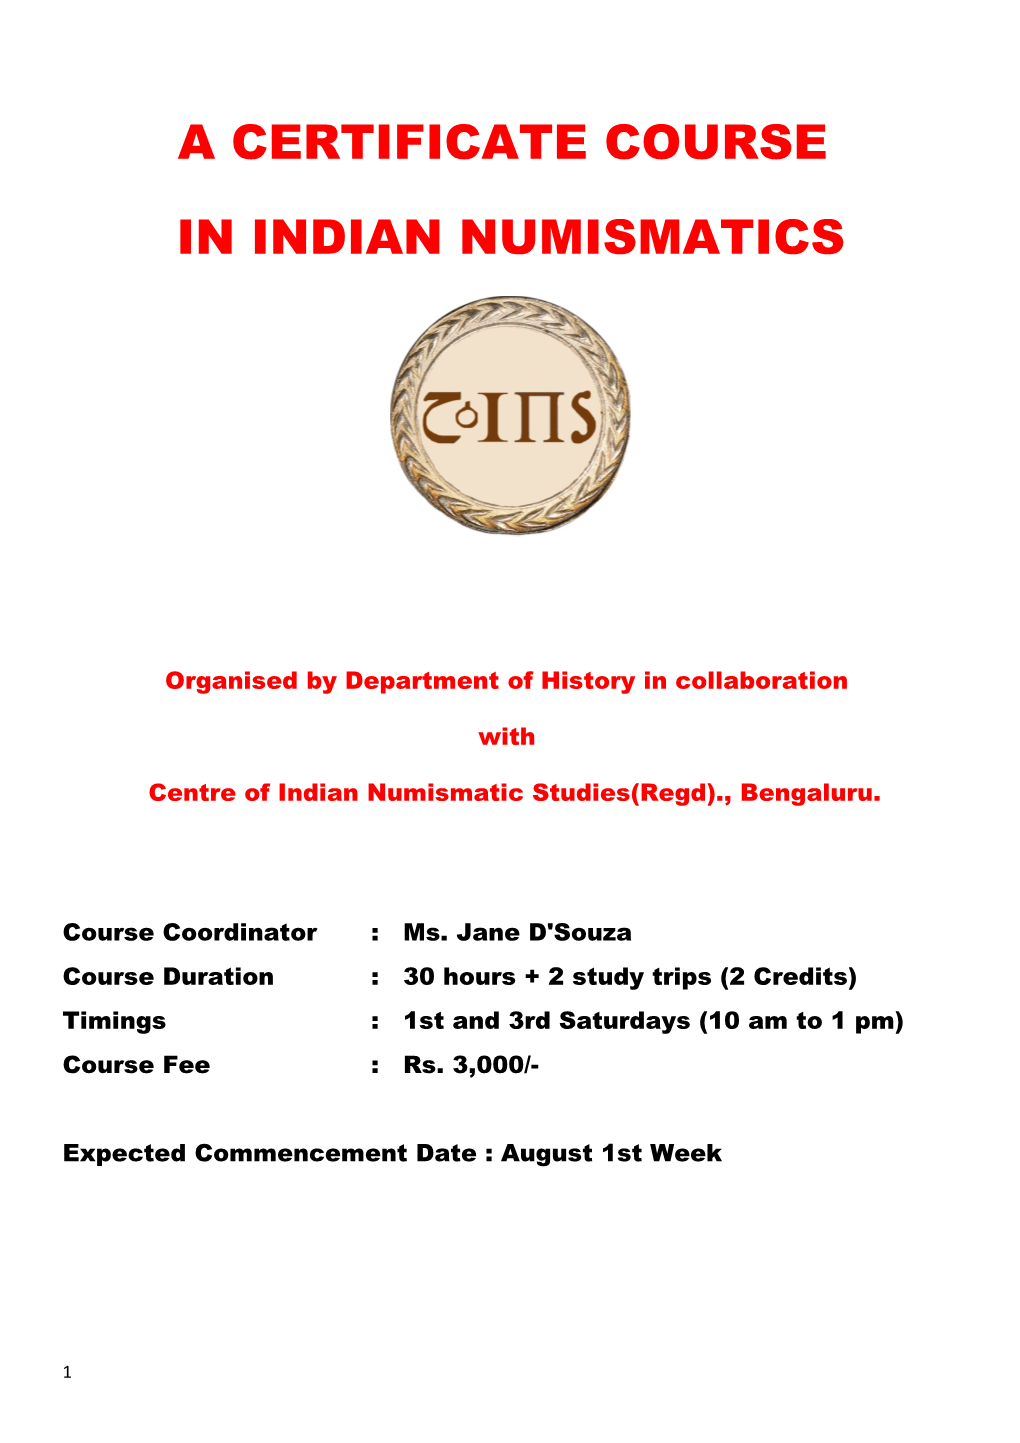 A Certificate Course in Indian Numismatics